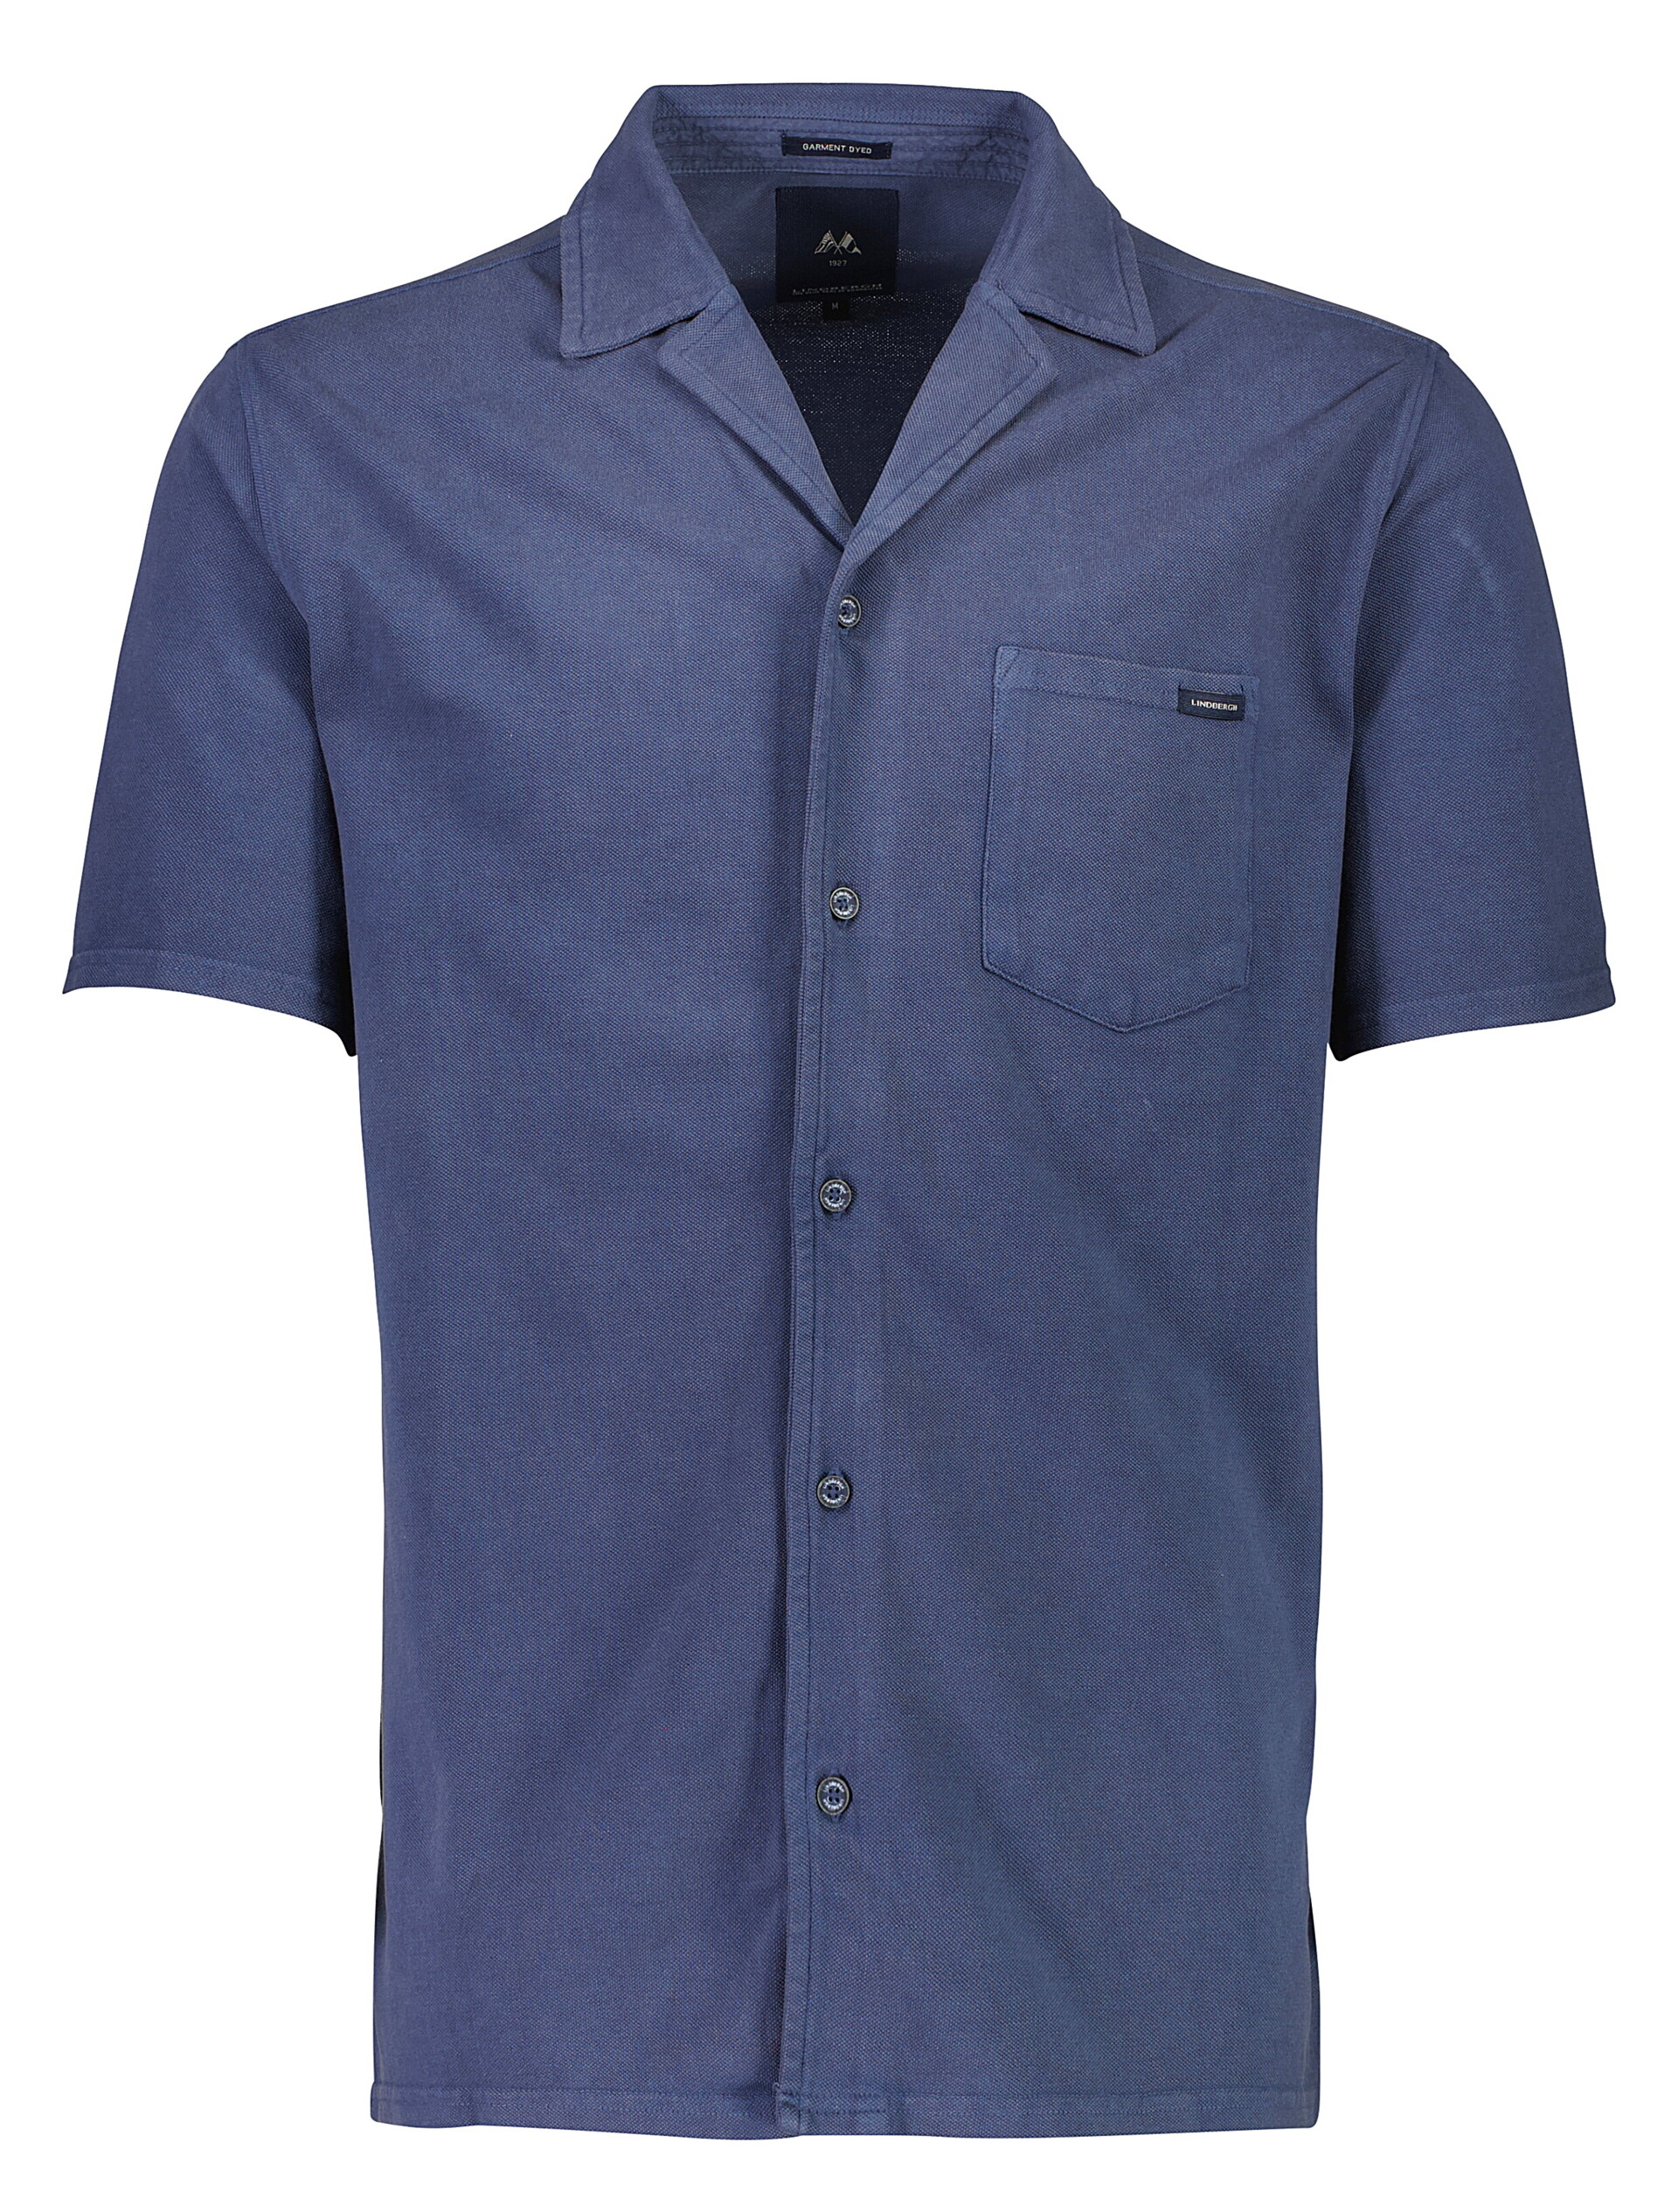 Lindbergh Casual shirt blue / dark navy